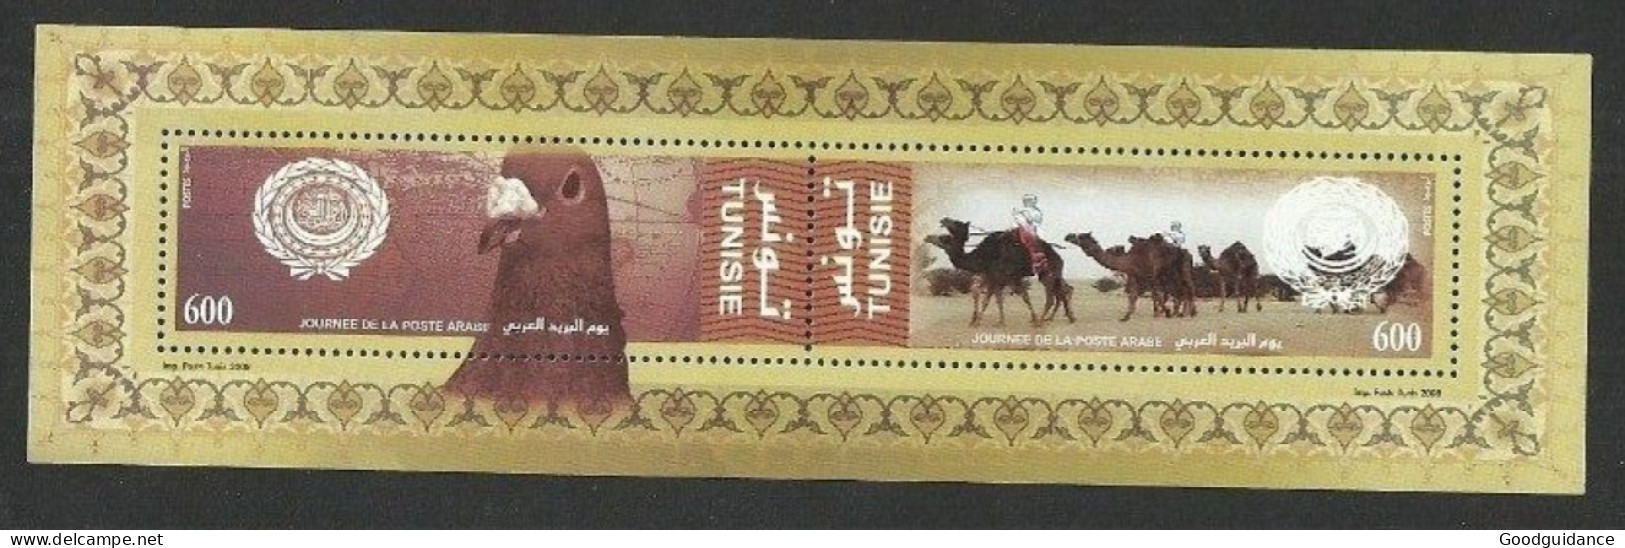 2008- Tunisia-  Minisheet  - Arab Post Day 2008 - Joint Issue - Bird - Camel - Desert - MNH** - Jordan